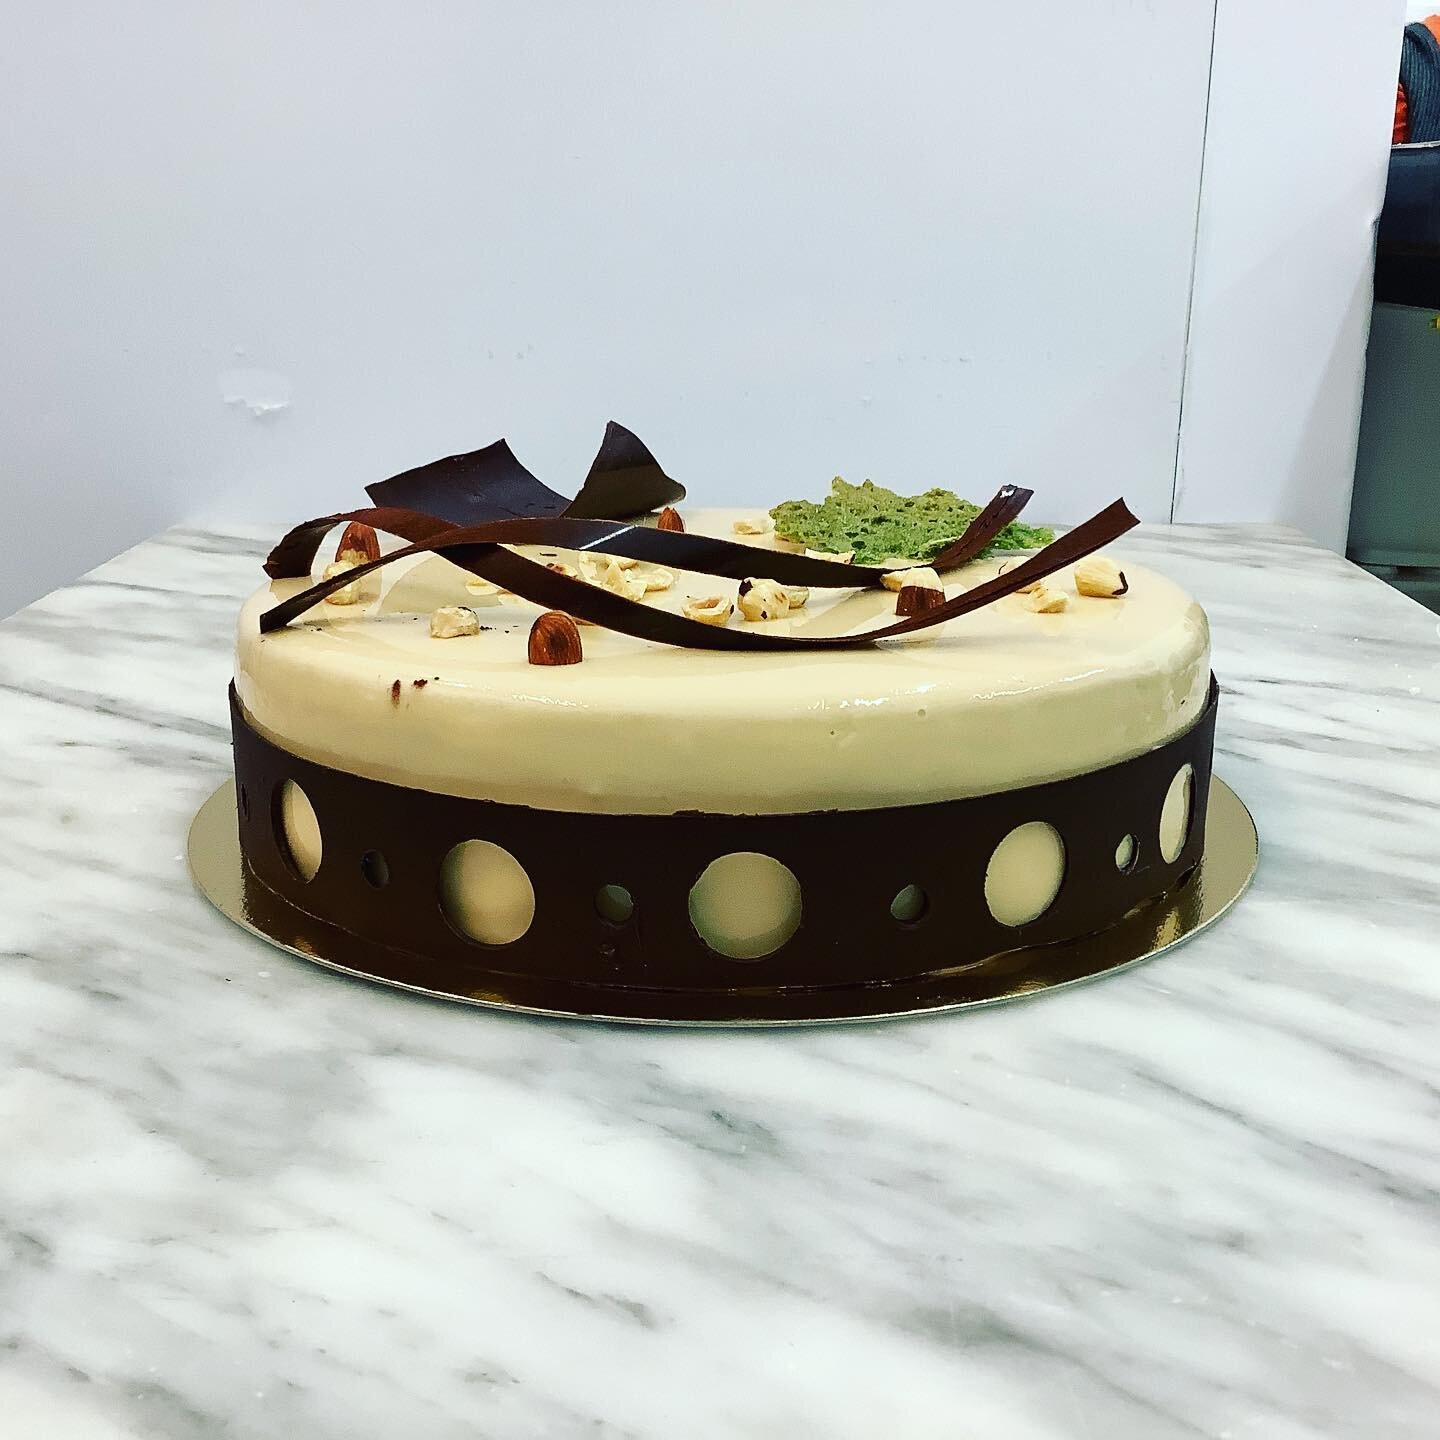 #banana #cake #caramel  #chocolate #pastry #yummy